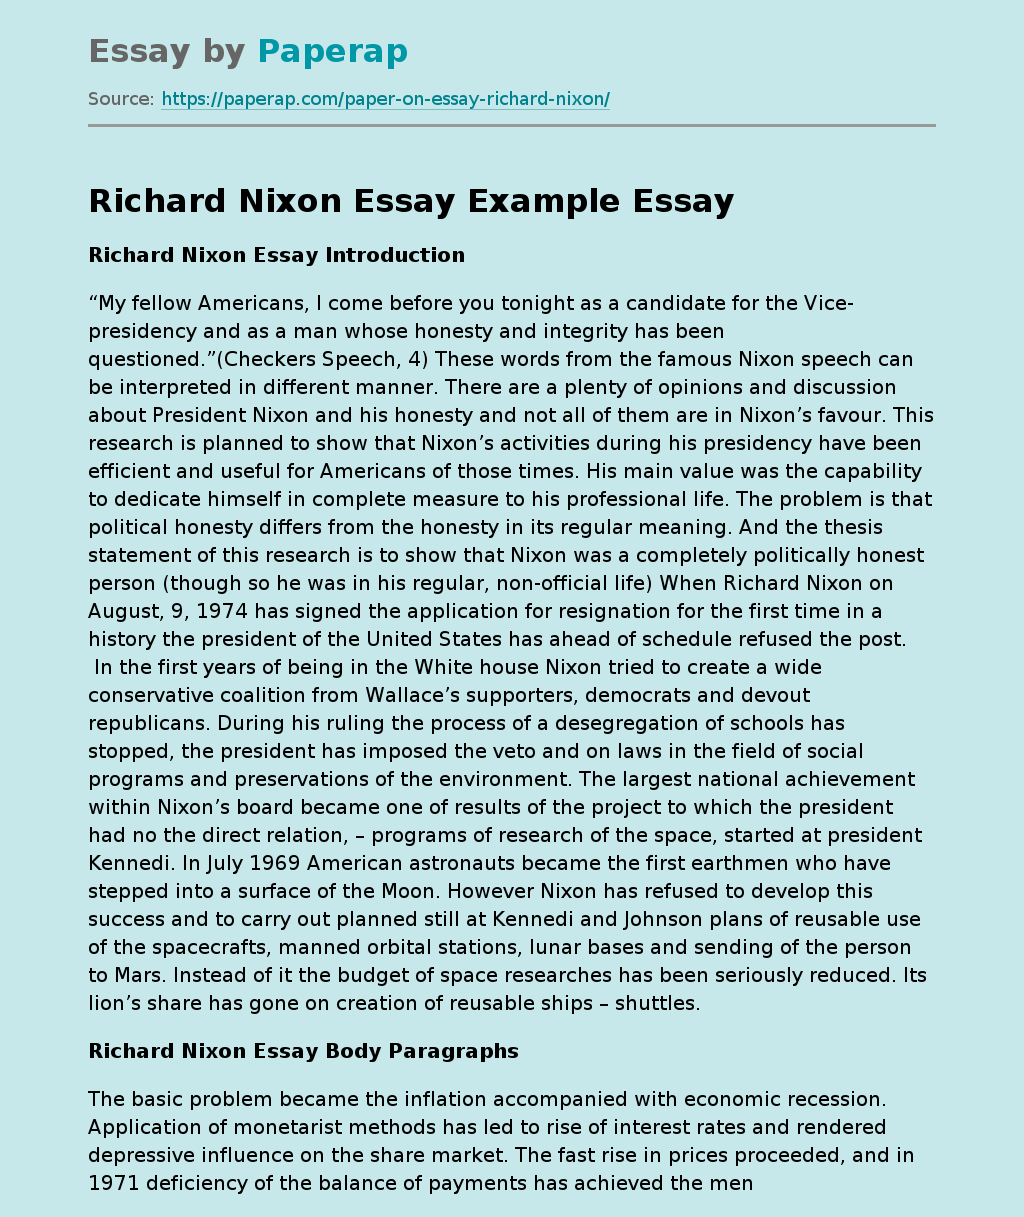 Richard Nixon Essay Example